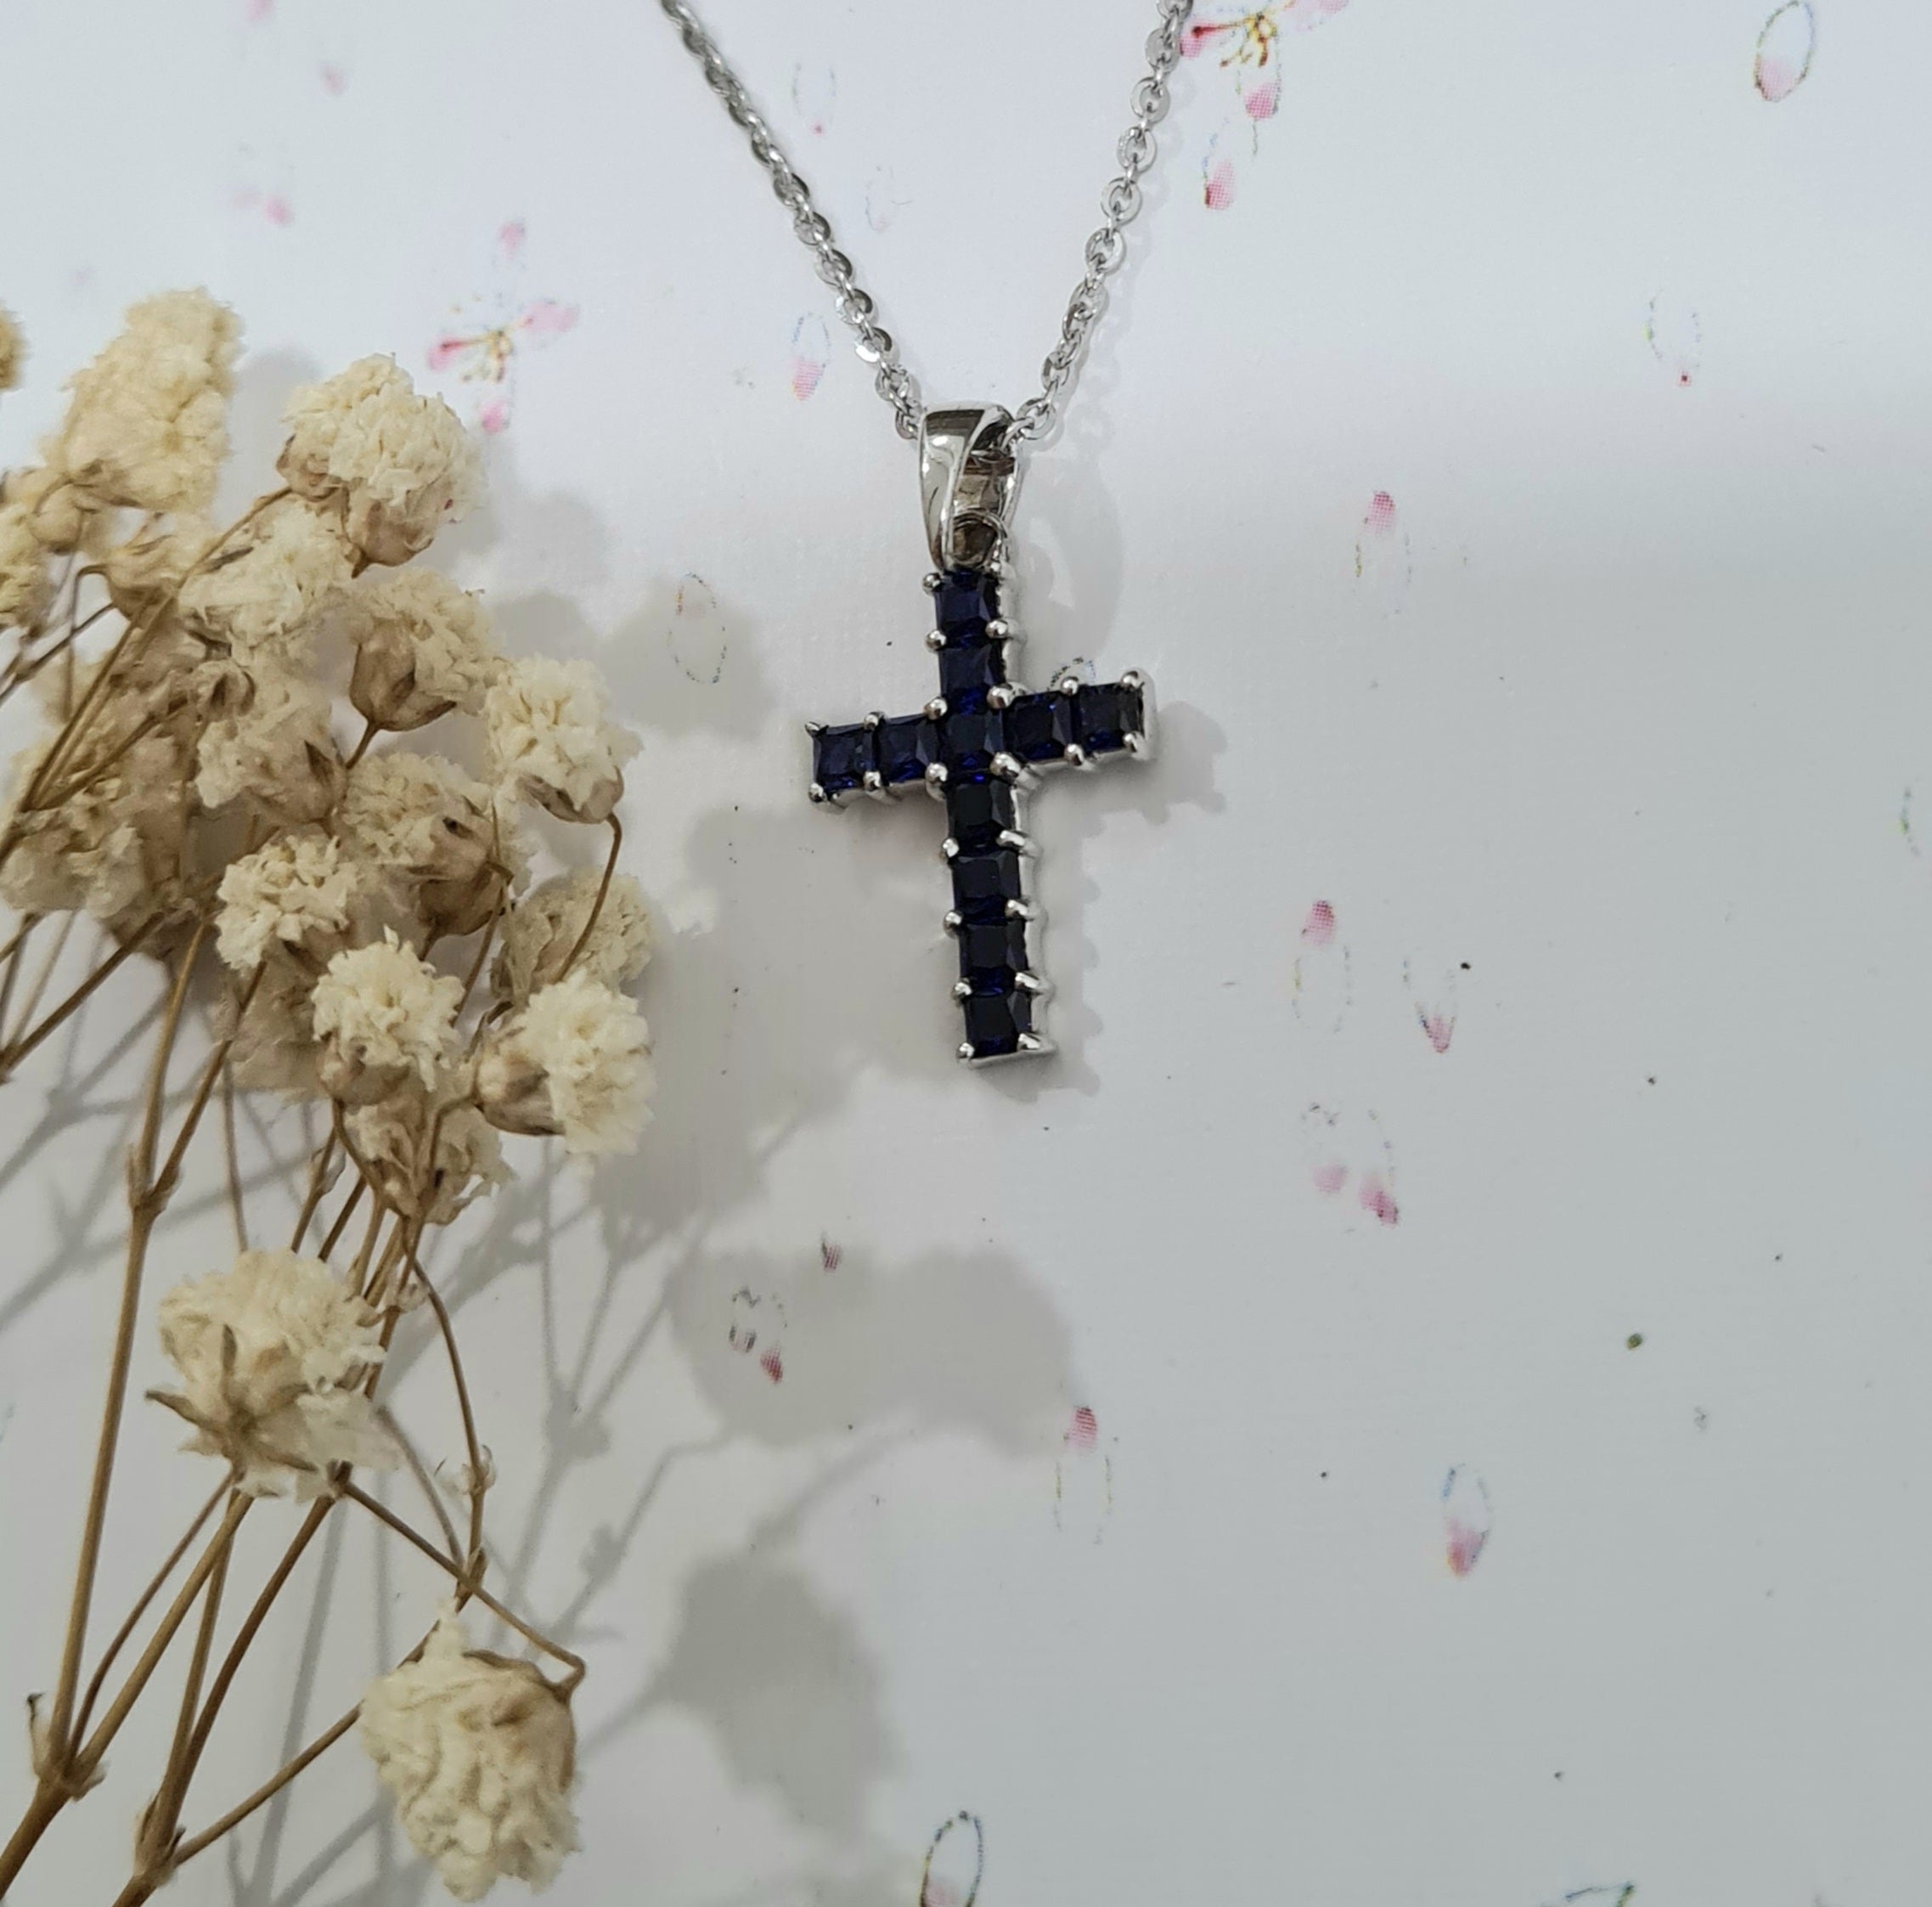 Sapphire Cross Pendant